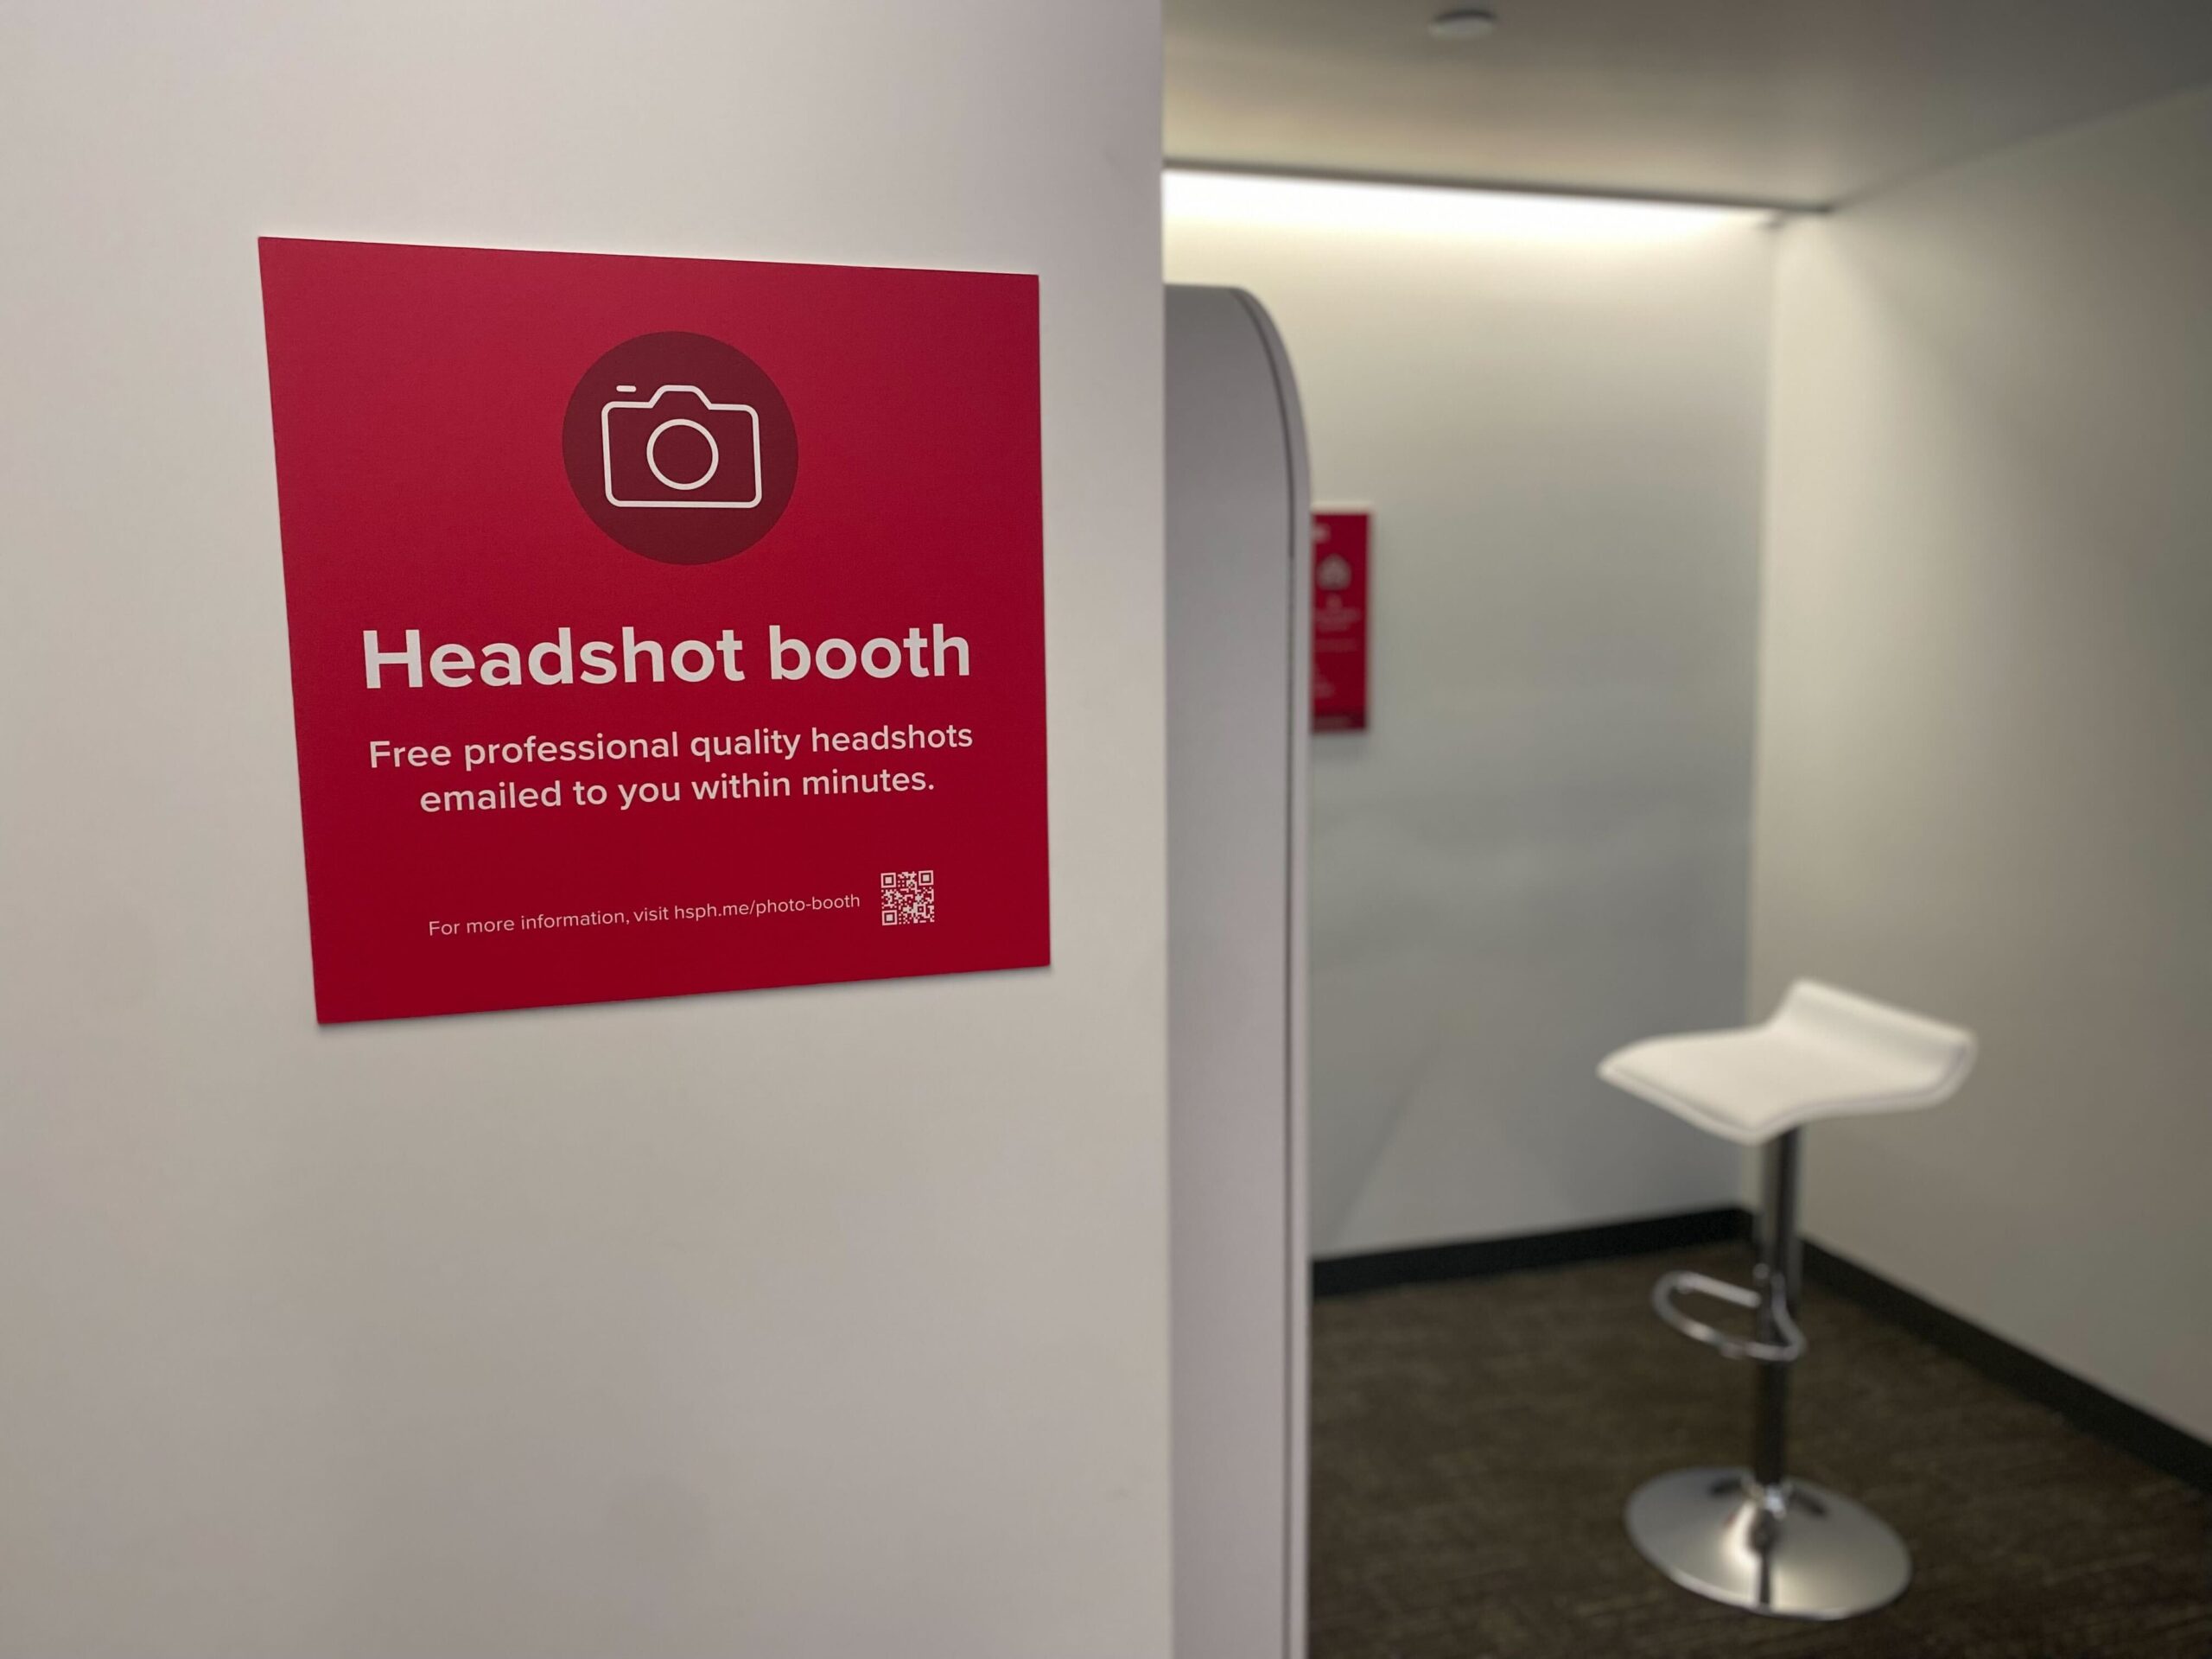 Headshot booth